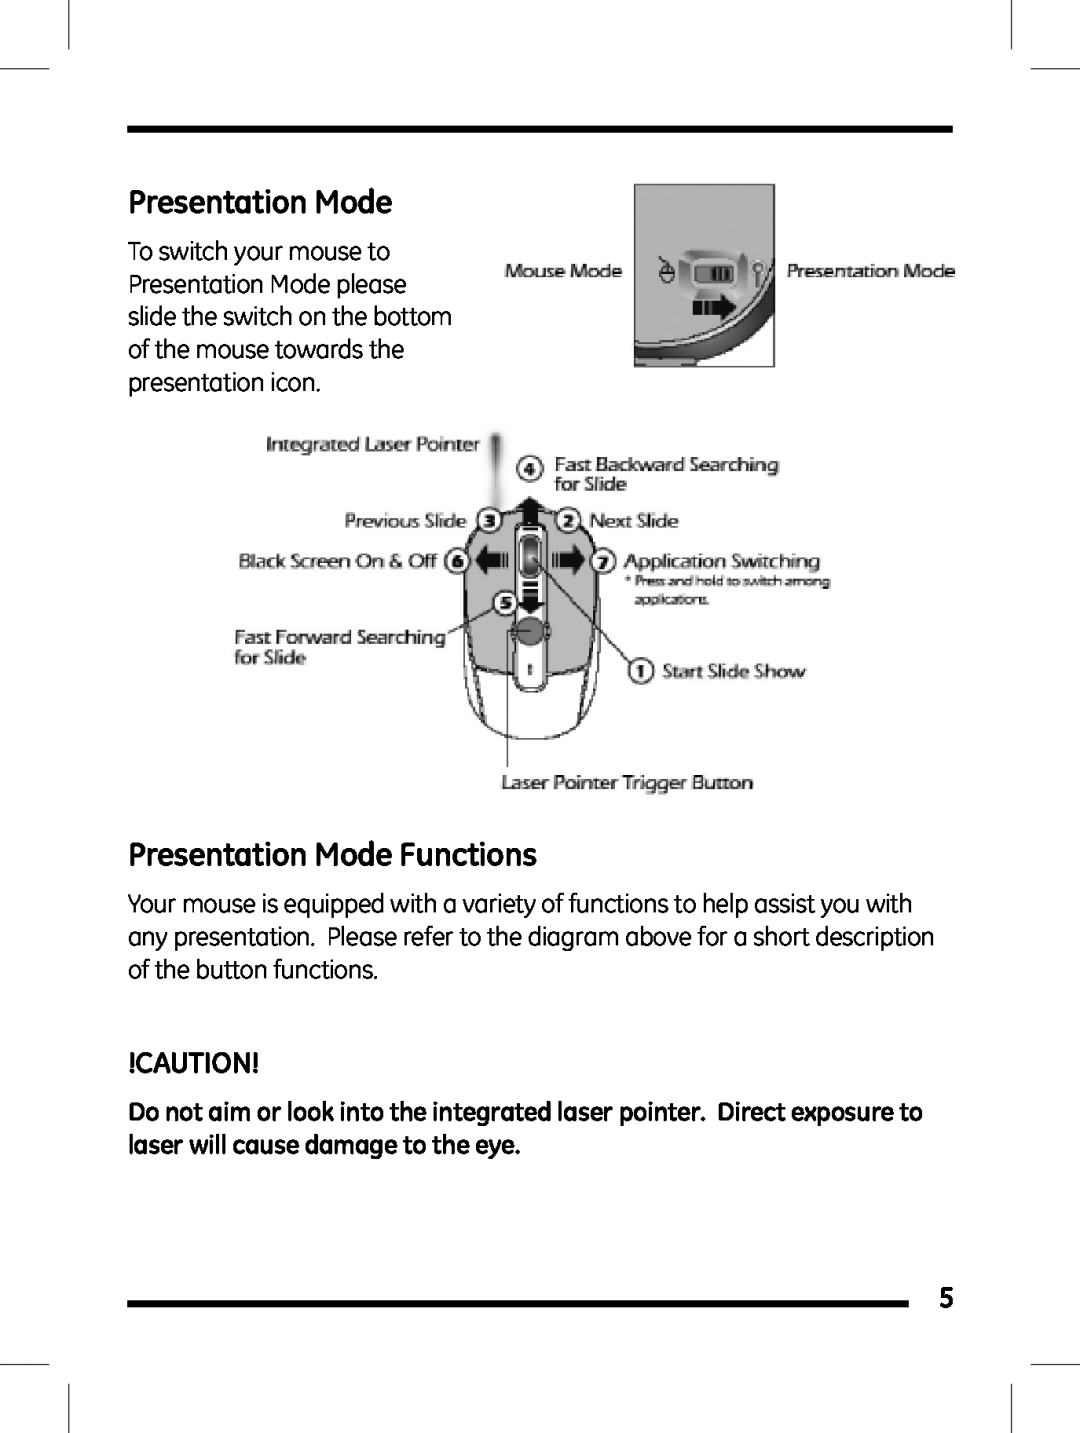 Jasco 98505 instruction manual Presentation Mode Functions 